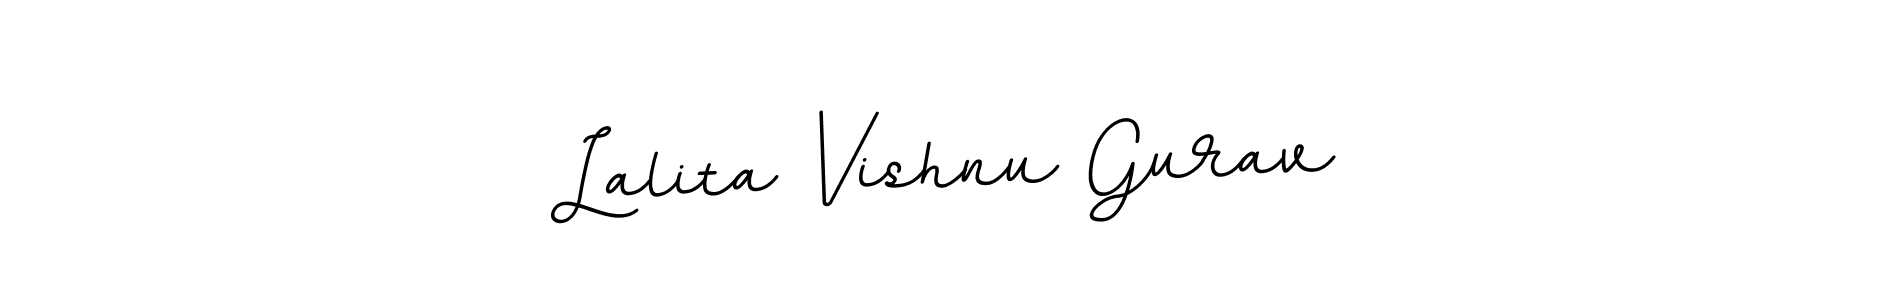 Make a beautiful signature design for name Lalita Vishnu Gurav. Use this online signature maker to create a handwritten signature for free. Lalita Vishnu Gurav signature style 11 images and pictures png